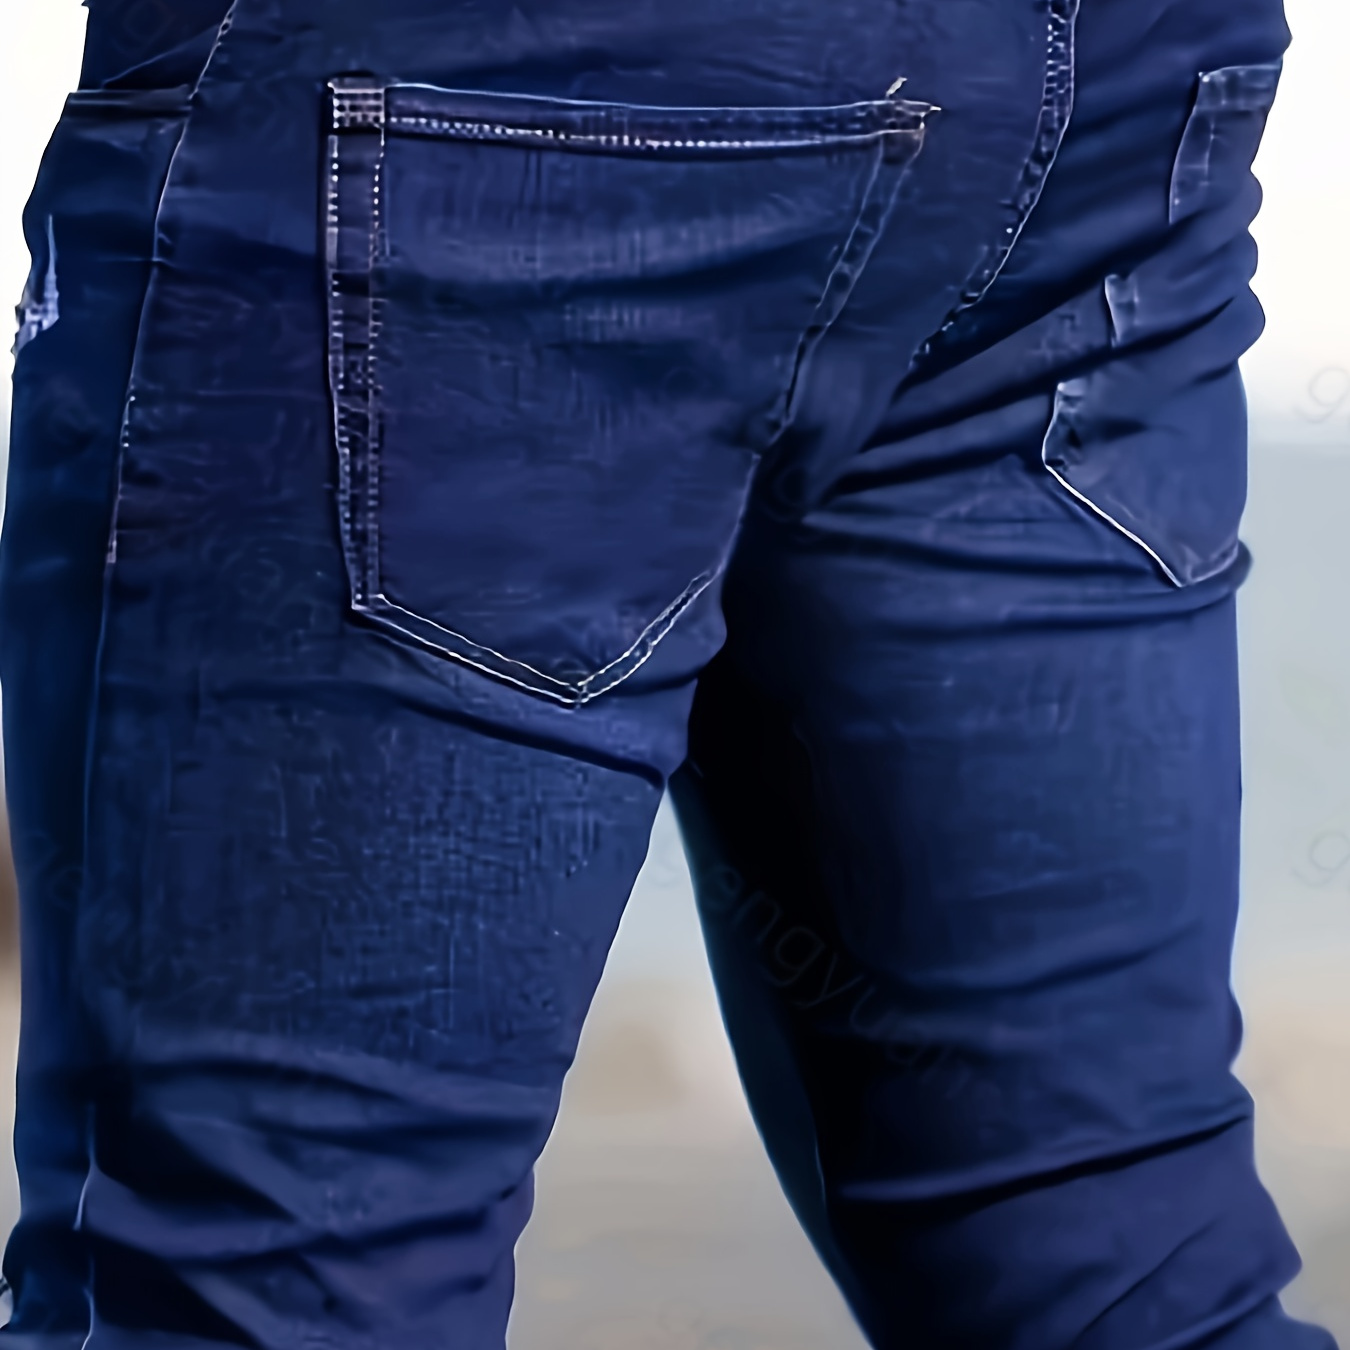 

Men's Distressed Jeans, Skinny Fit Denim Pants